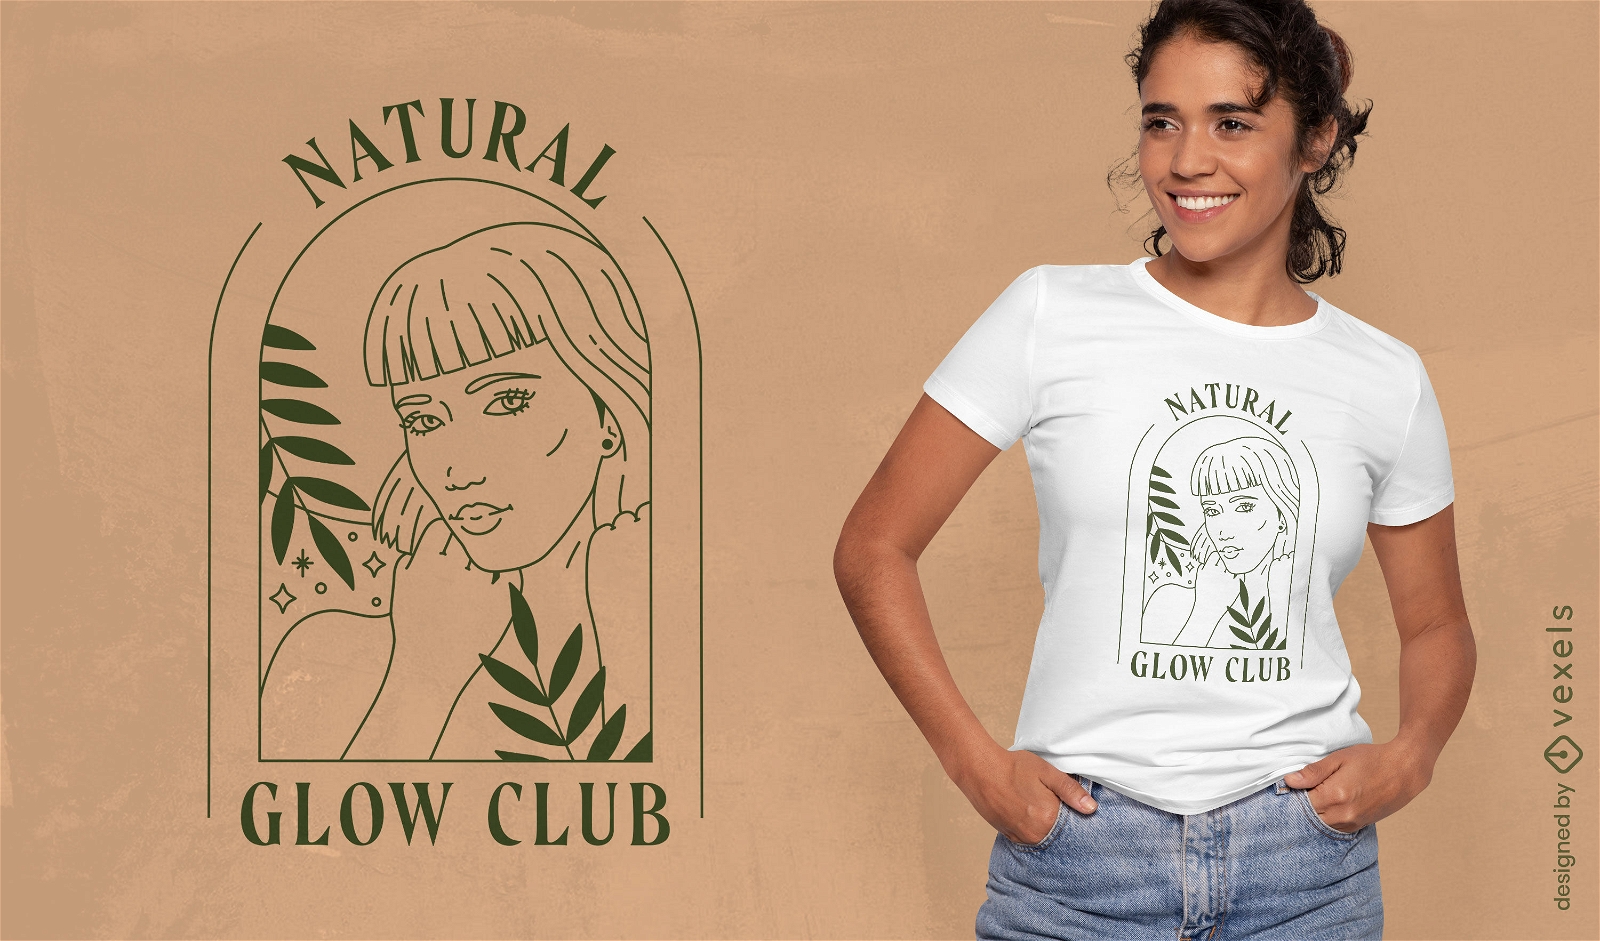 Natural glow club beauty t-shirt design